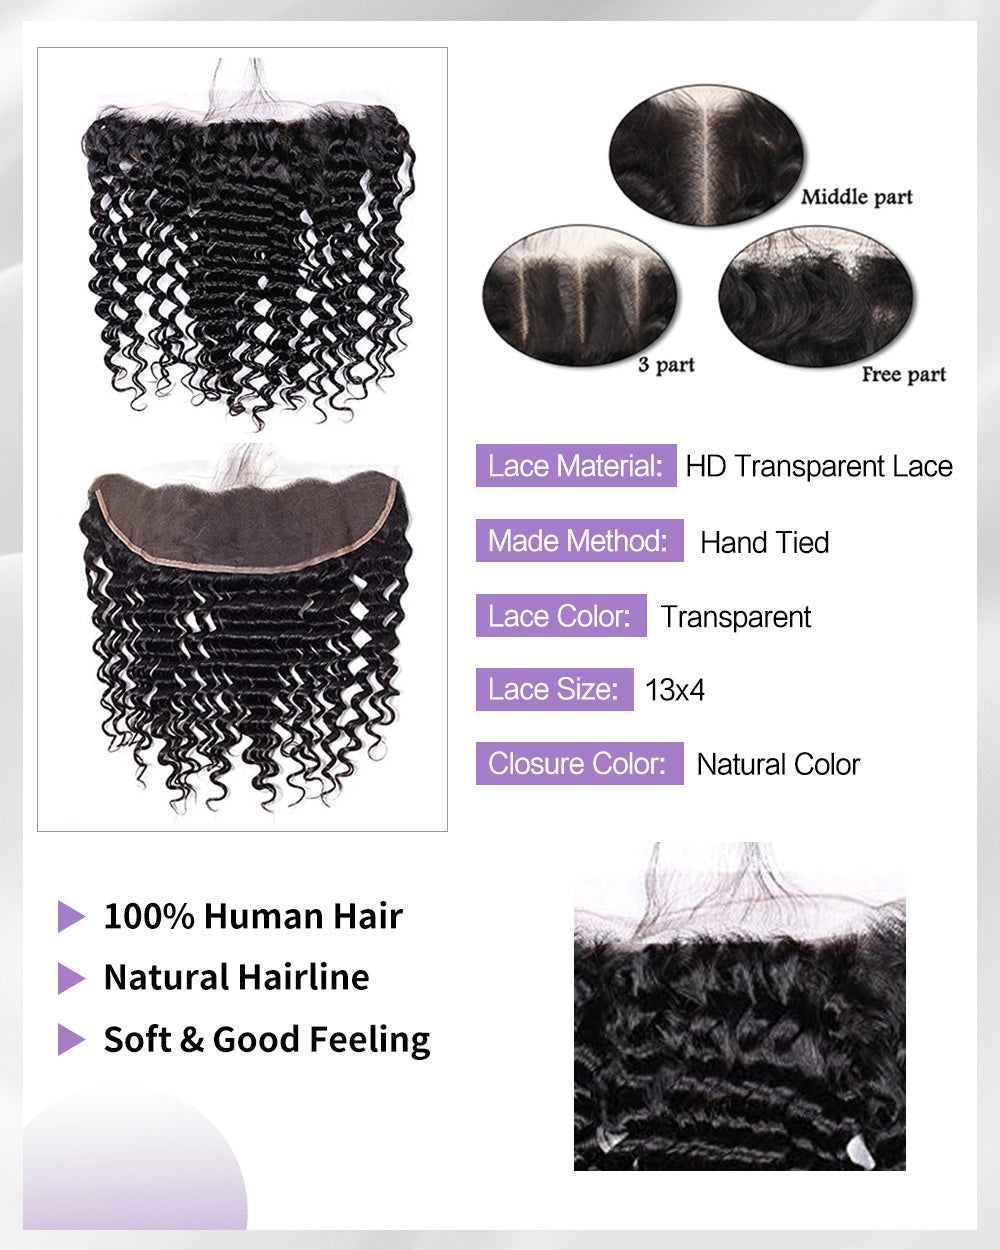 Loose Deep Wave 4 Bundles Hair Deals With Lace Frontal,Cheap 4 Bundle Deals With Frontal For Sale | Brennas Hair